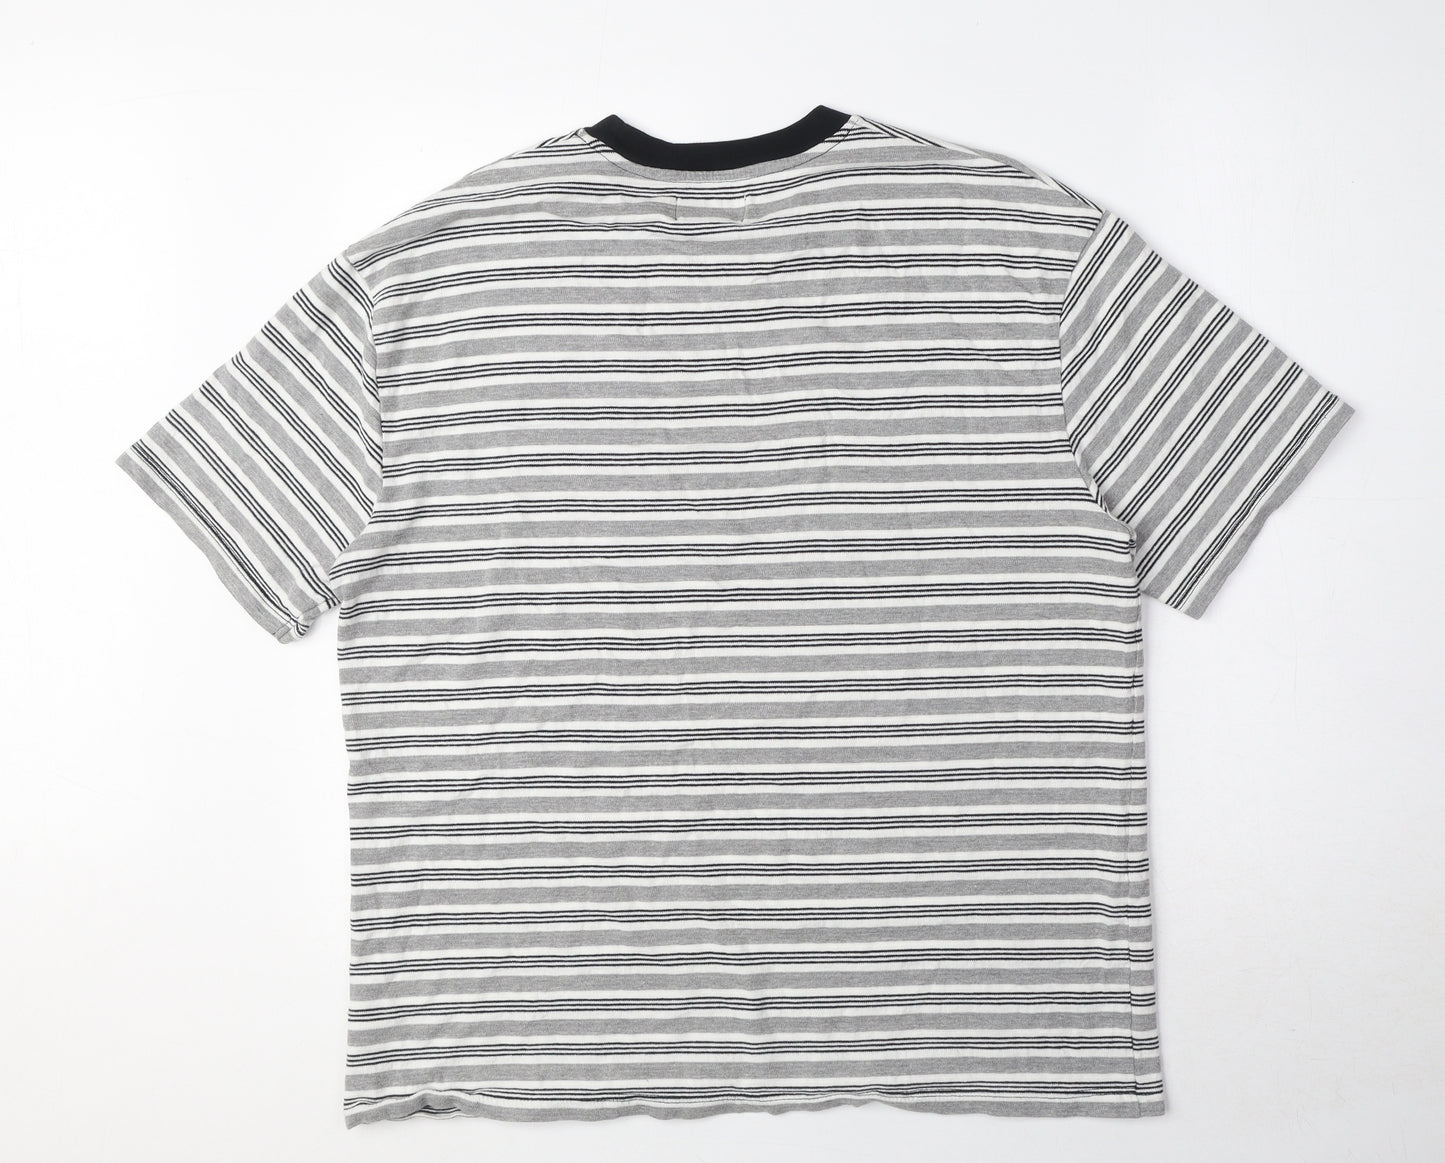 Topman Mens Grey Striped Cotton T-Shirt Size M Round Neck